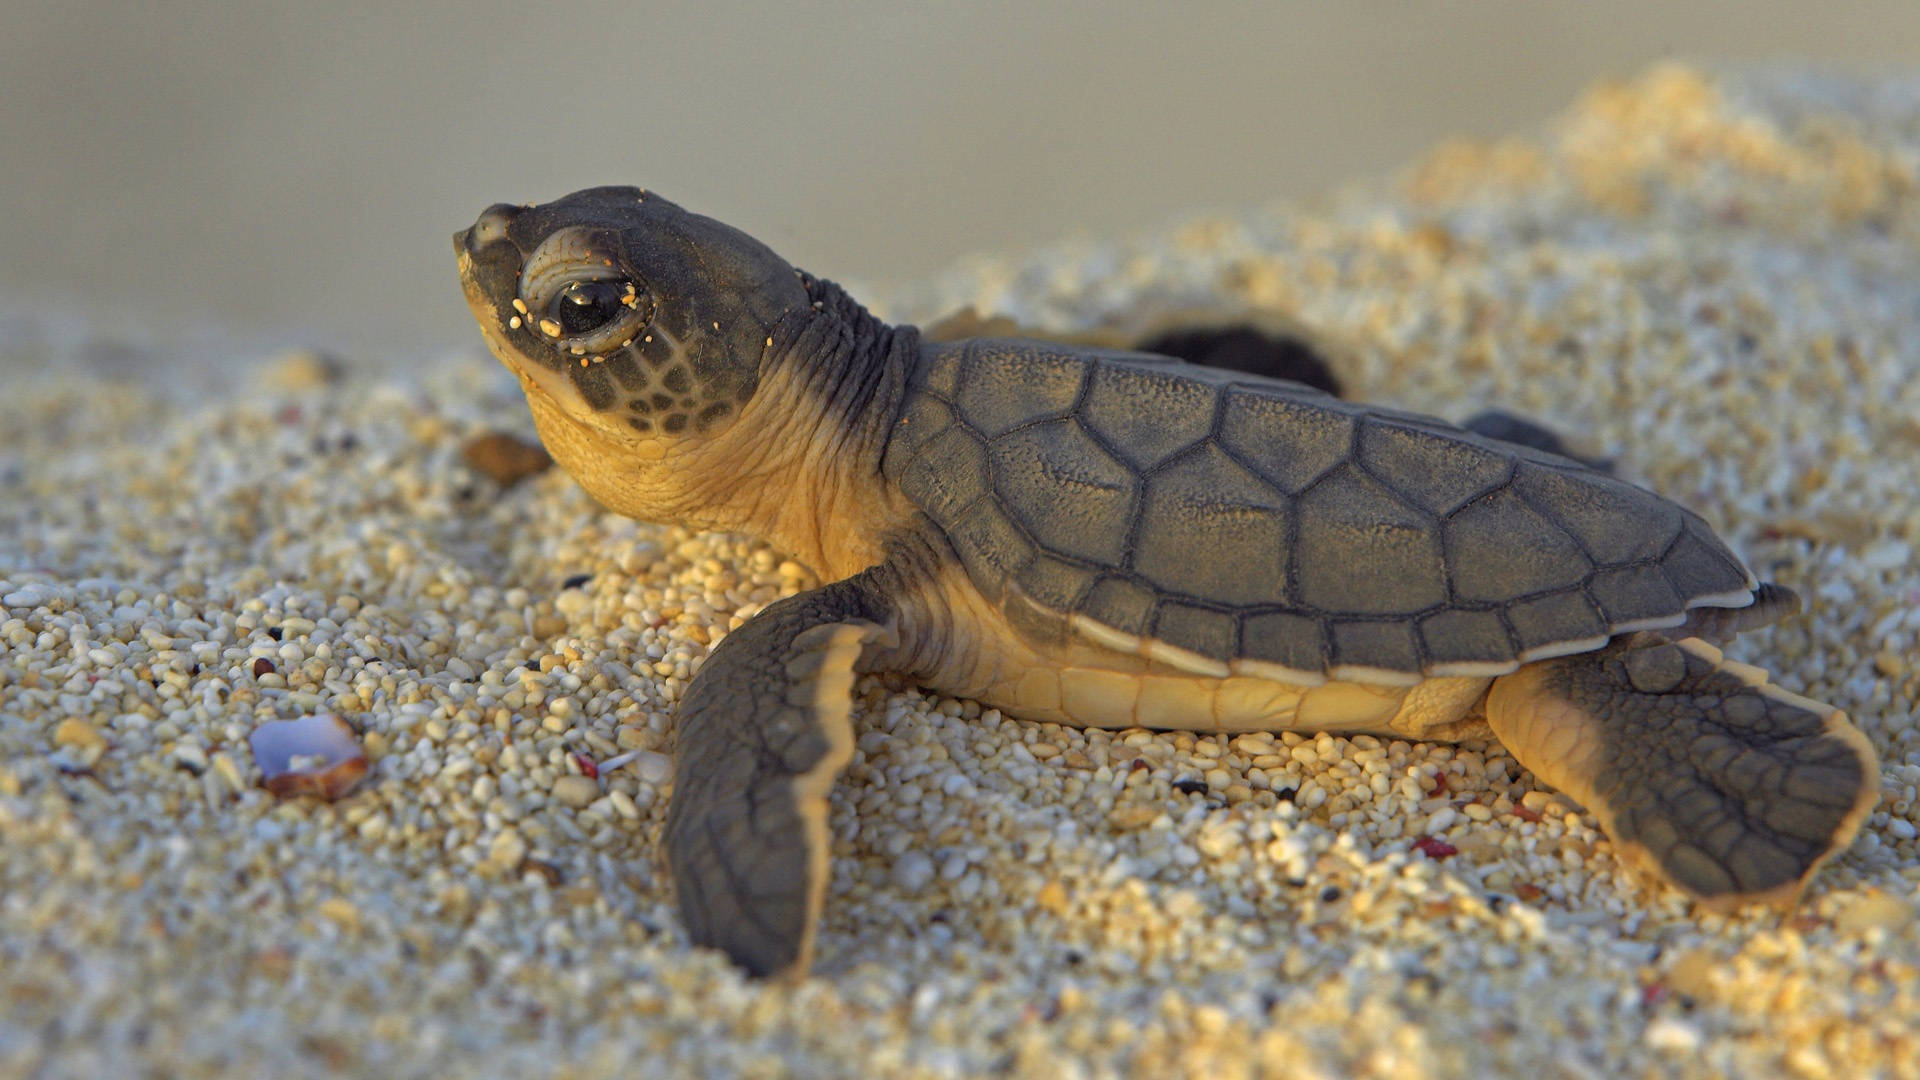 Brown Cute Turtle On Sand